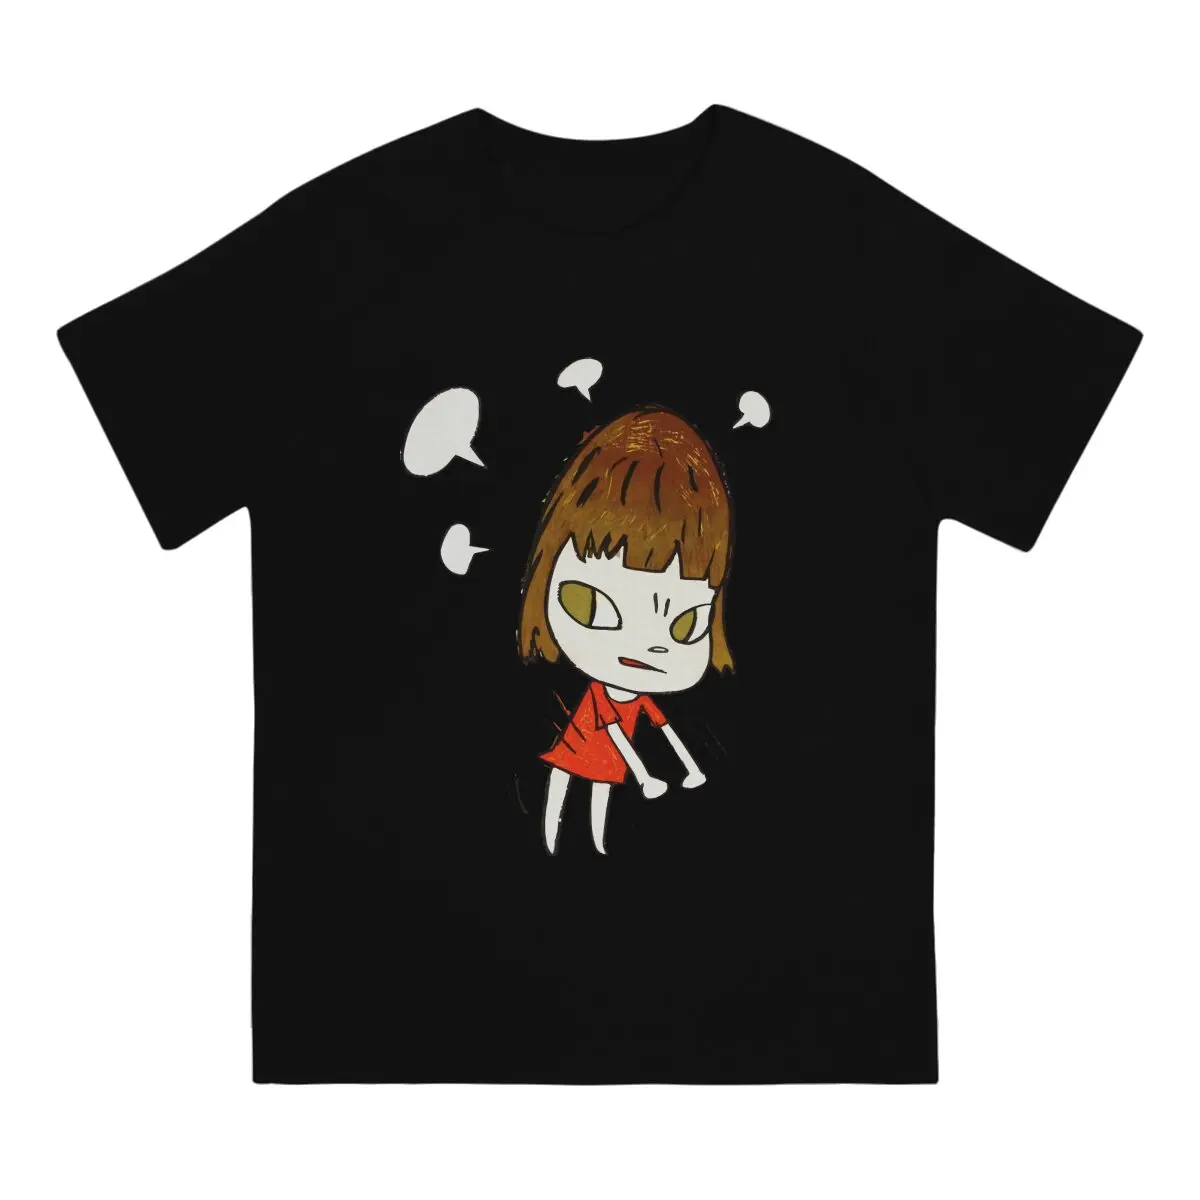 

Little Girl Dancing TShirt Men 100% Cotton Funny T-Shirt Crew Neck Yoshitomo Nara Japanese Artist Tee Shirt Short Sleeve Clothes